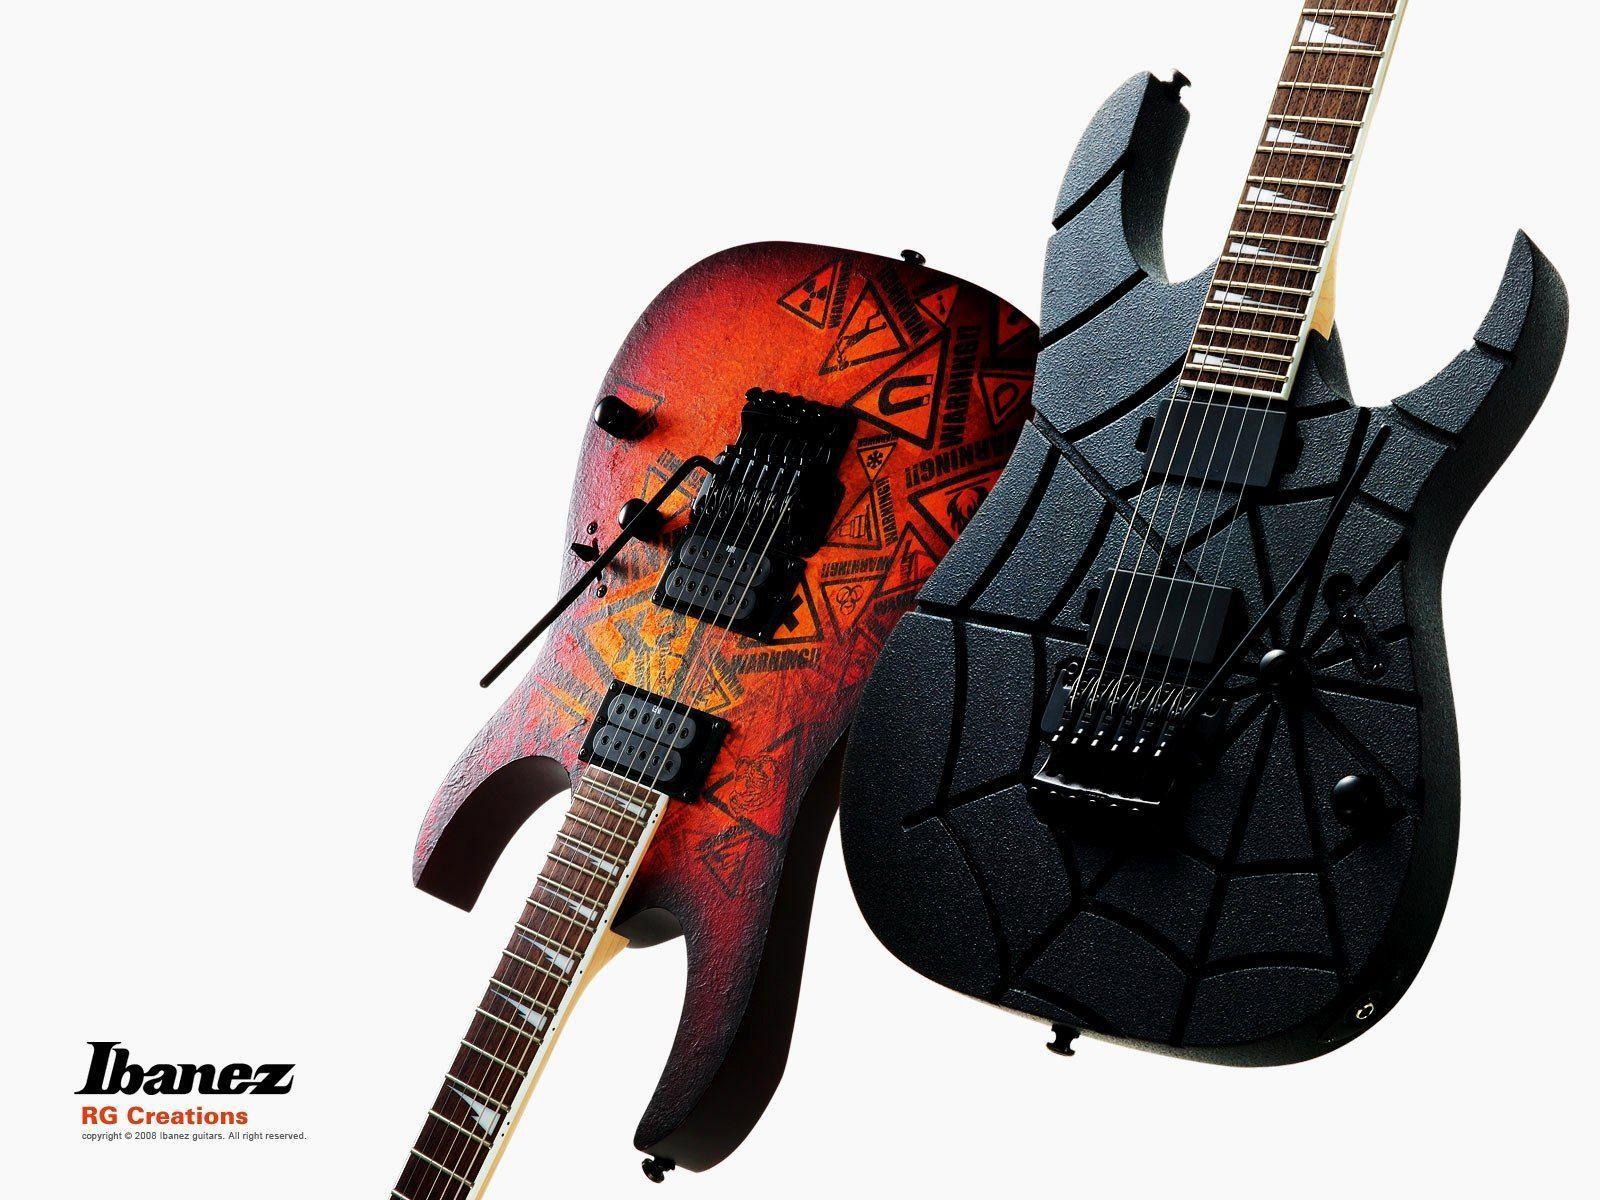 Ibanez Guitar photo of Ibanez Guitar Wallpaper for Desktop